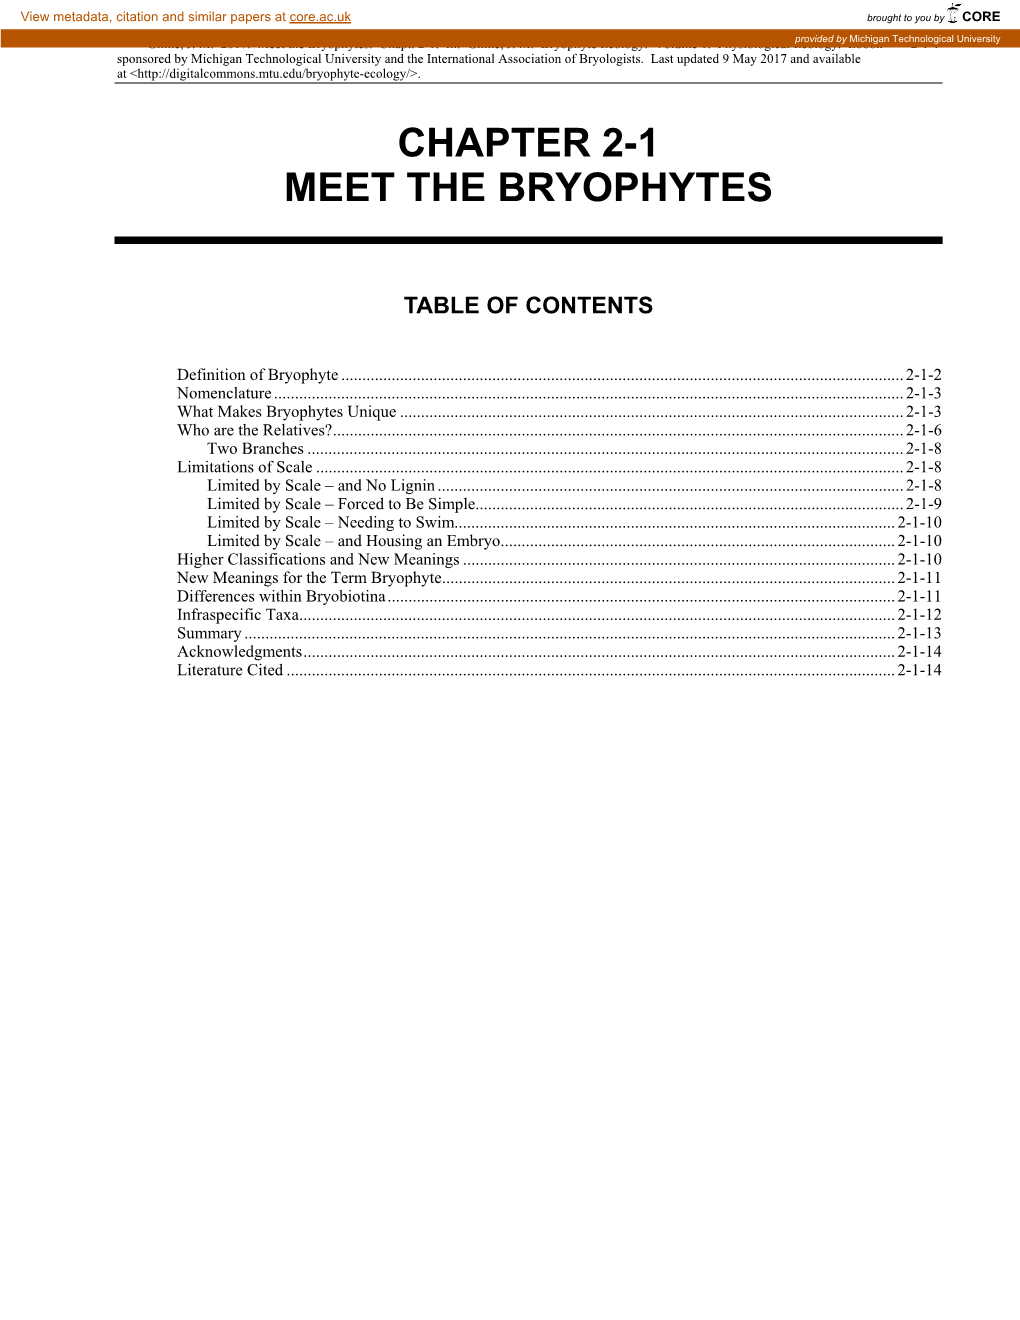 Meet the Bryophytes